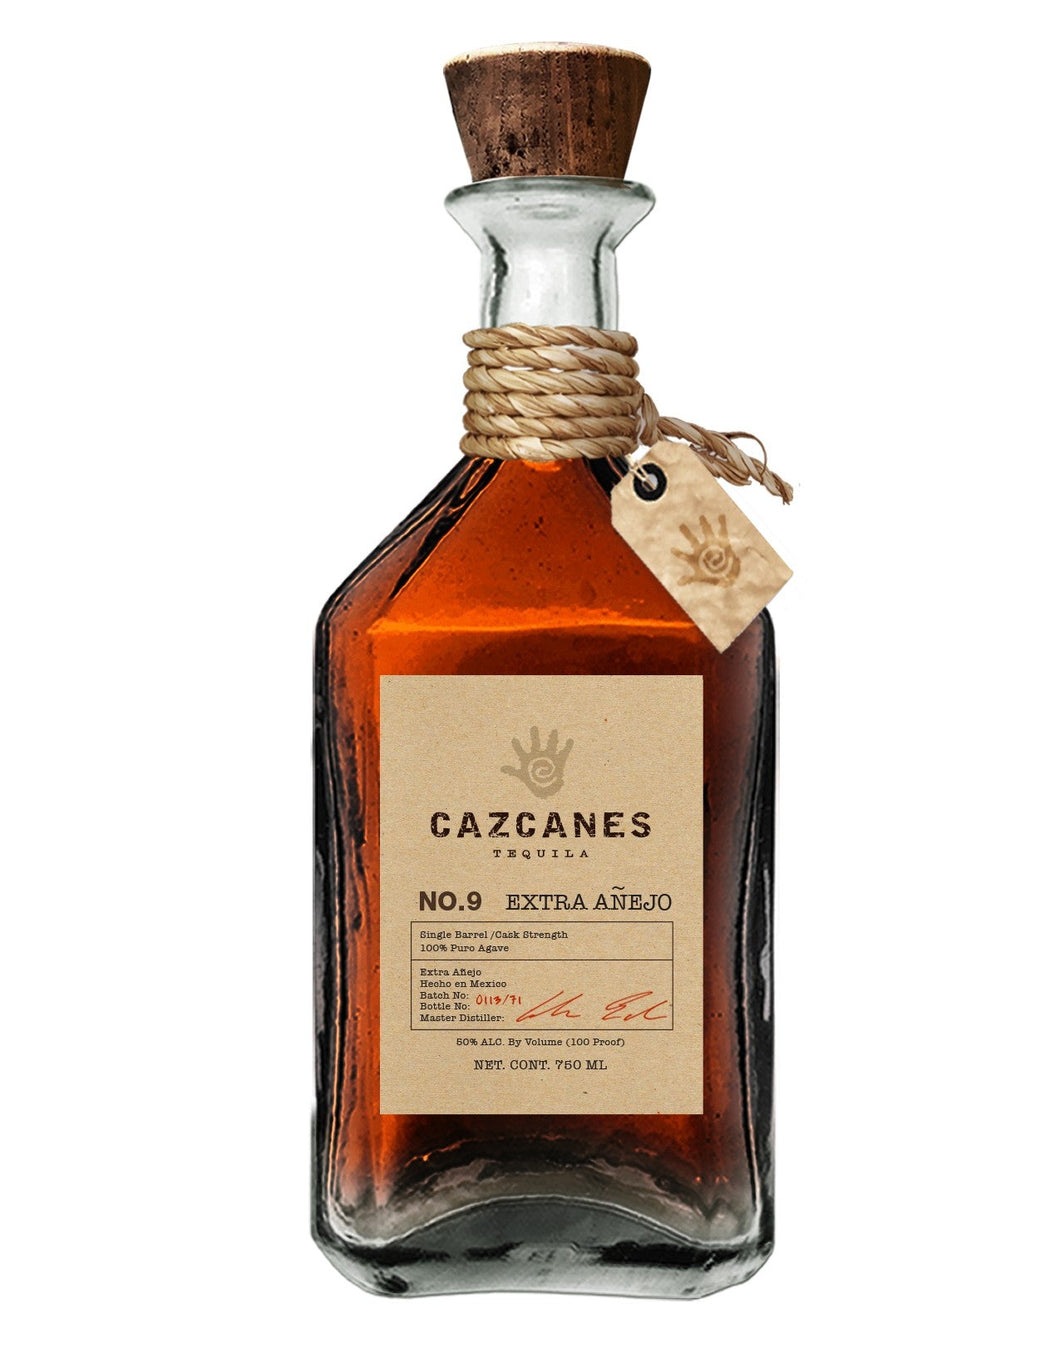 Cazcanes No.9 Extra Anejo Limited Edition Single Barrel Cask Strength Tequila